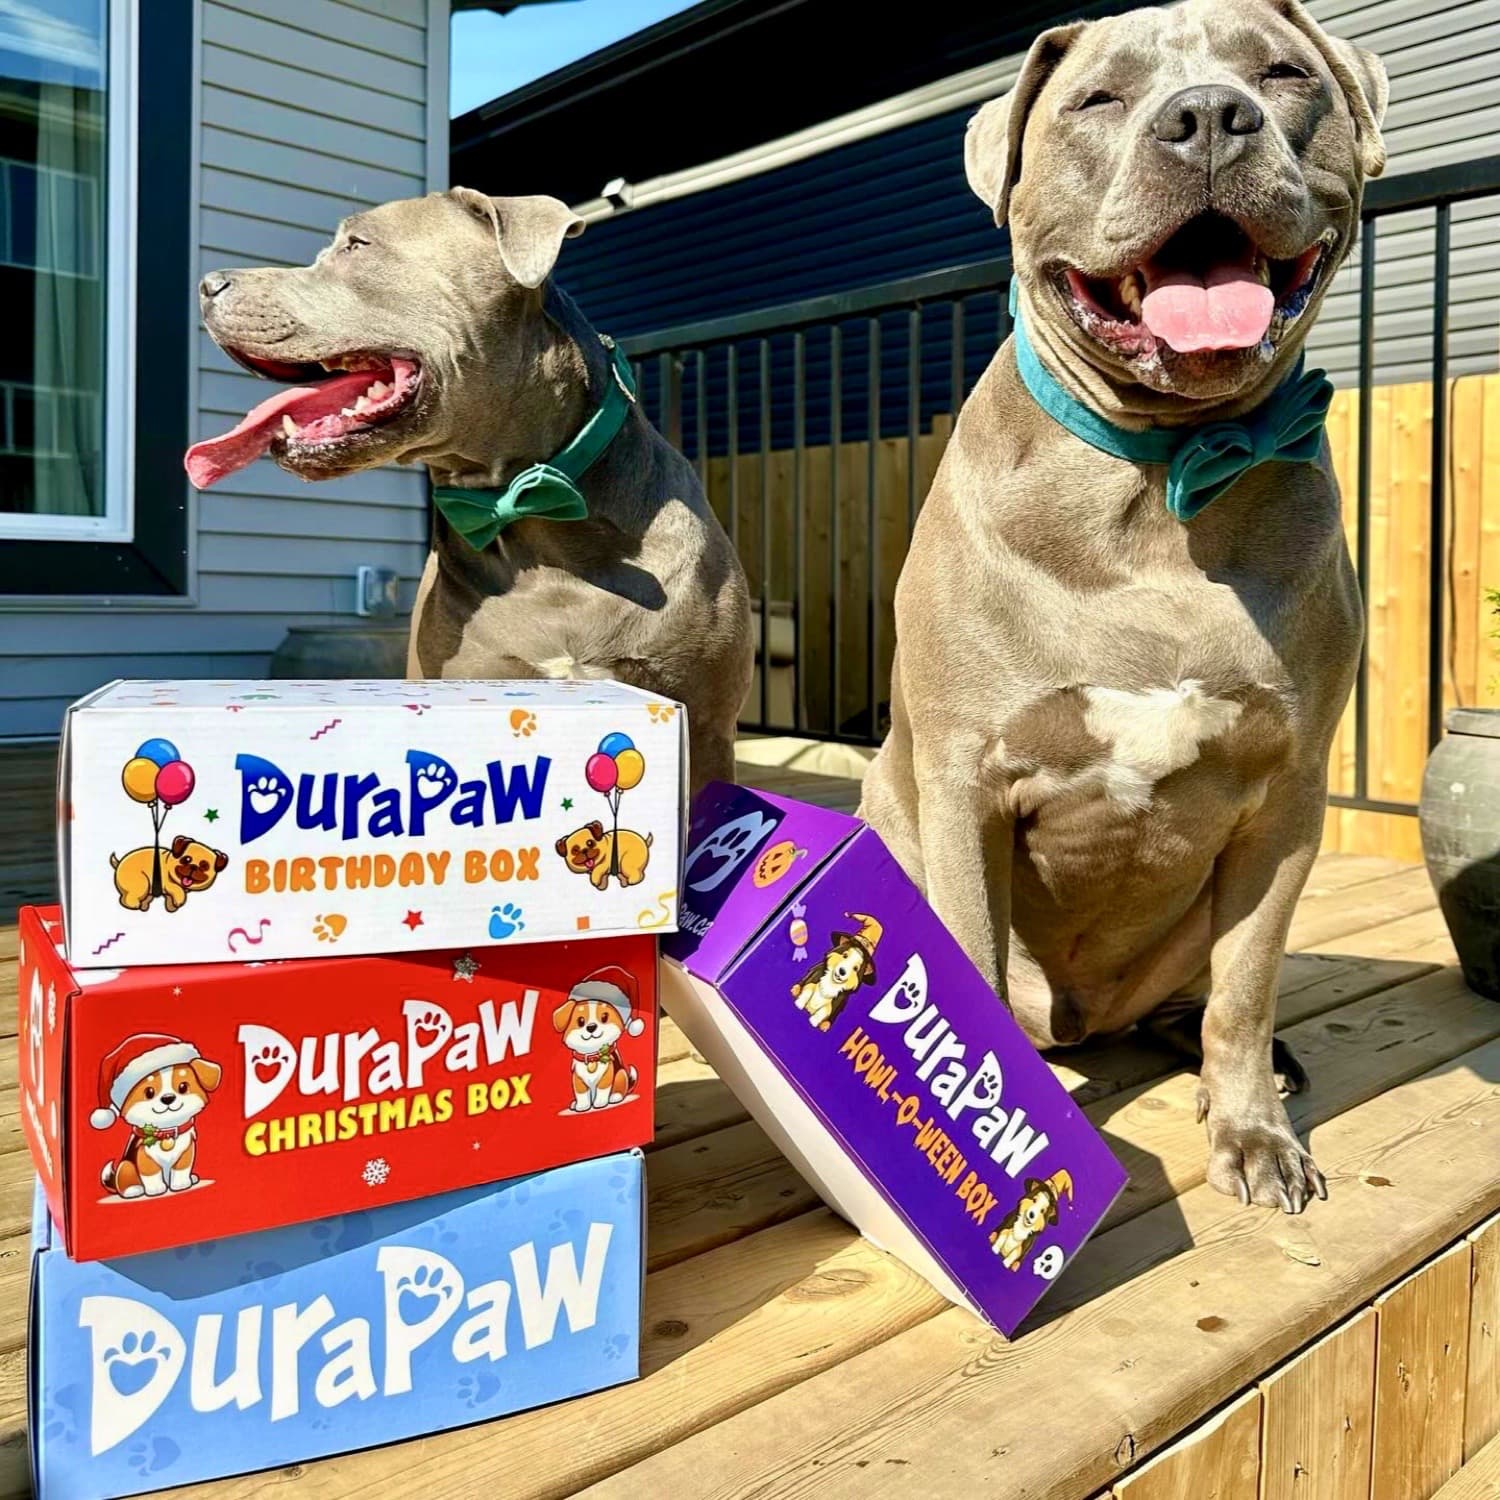 DuraPaw Holiday Dog Subscription Boxes